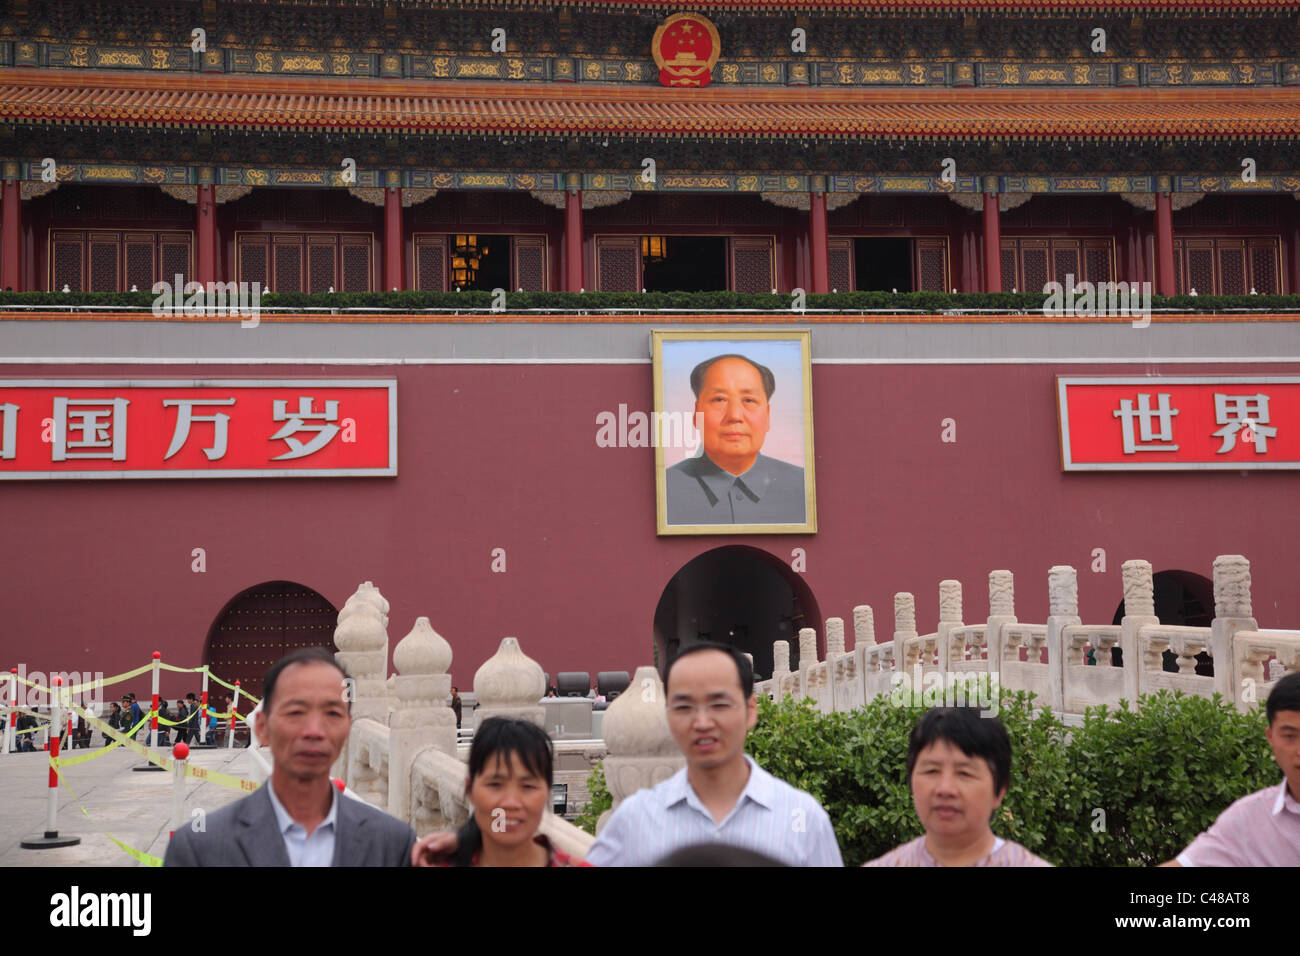 Forbidden City, Tiananmen Square, Beijing, China Stock Photo